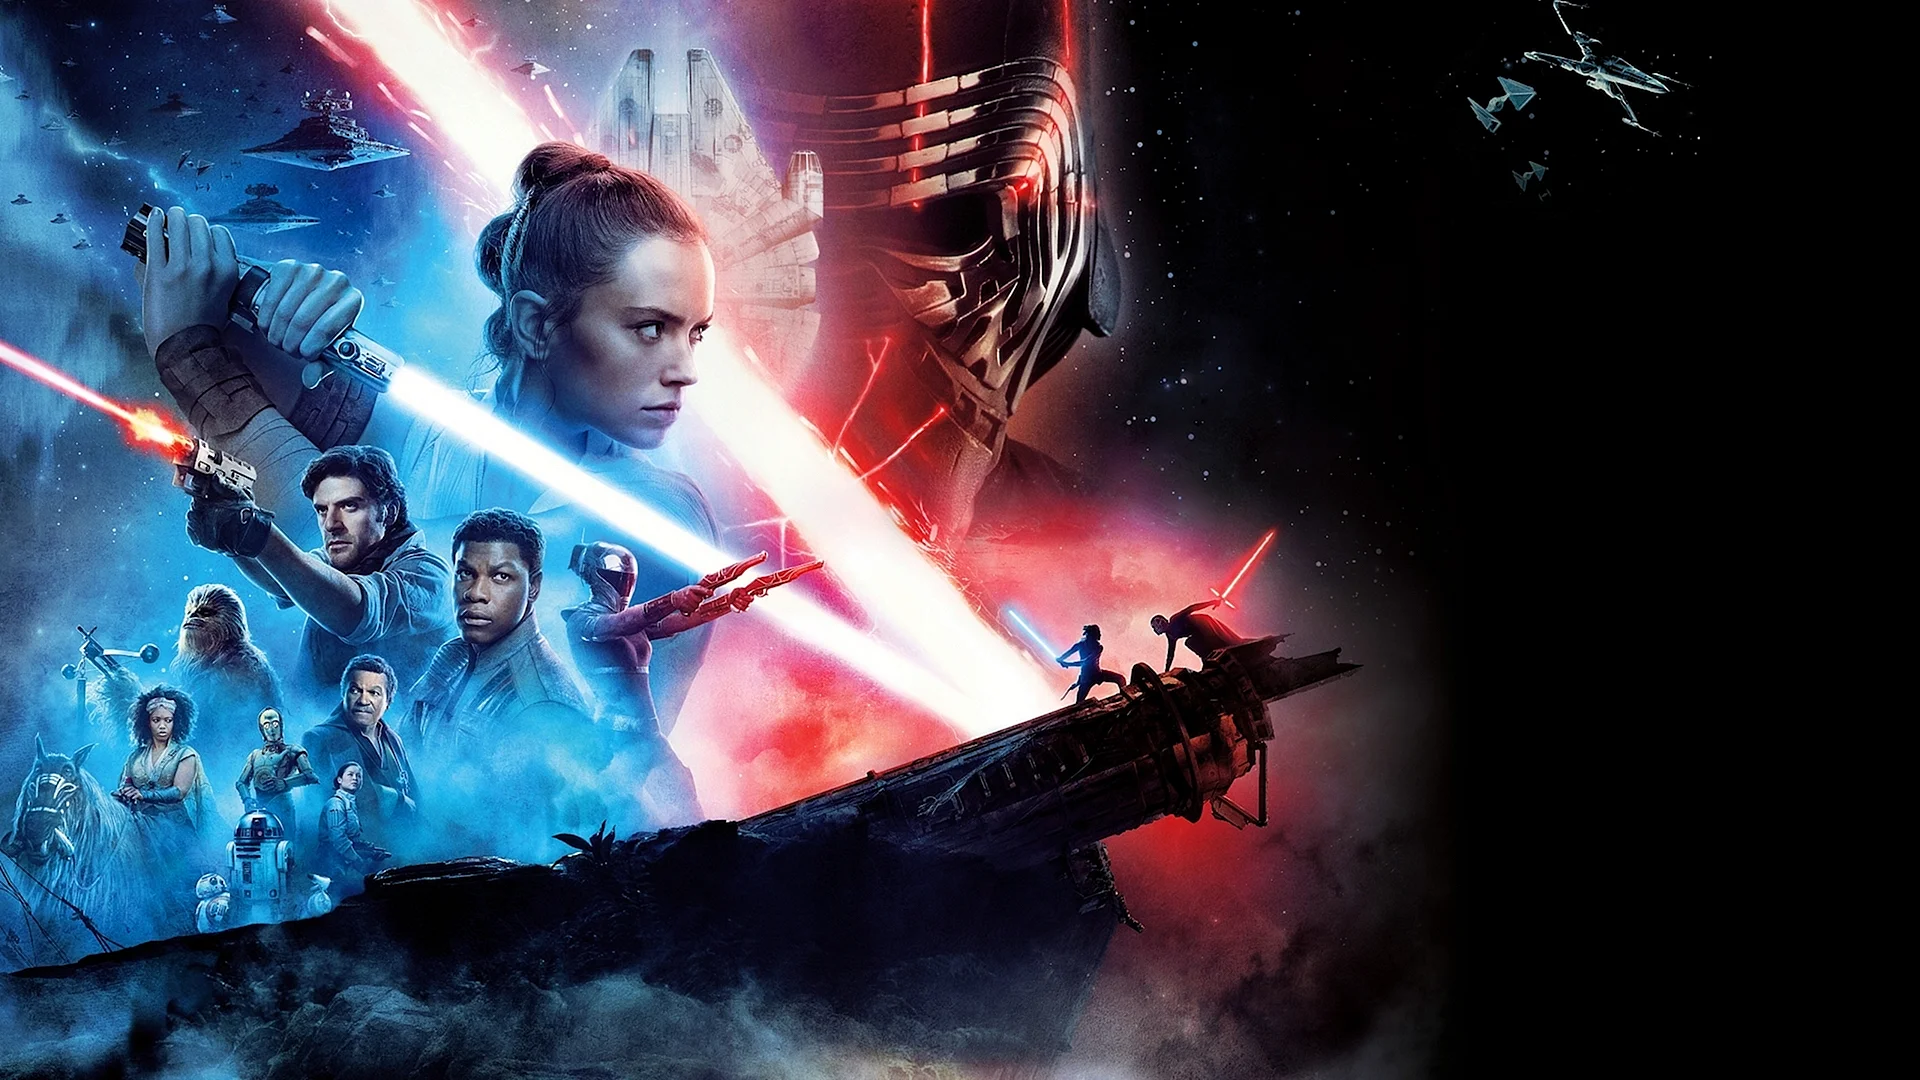 Star.Wars.Episode.Ix.The.Rise.Of.Skywalker.2019 Wallpaper